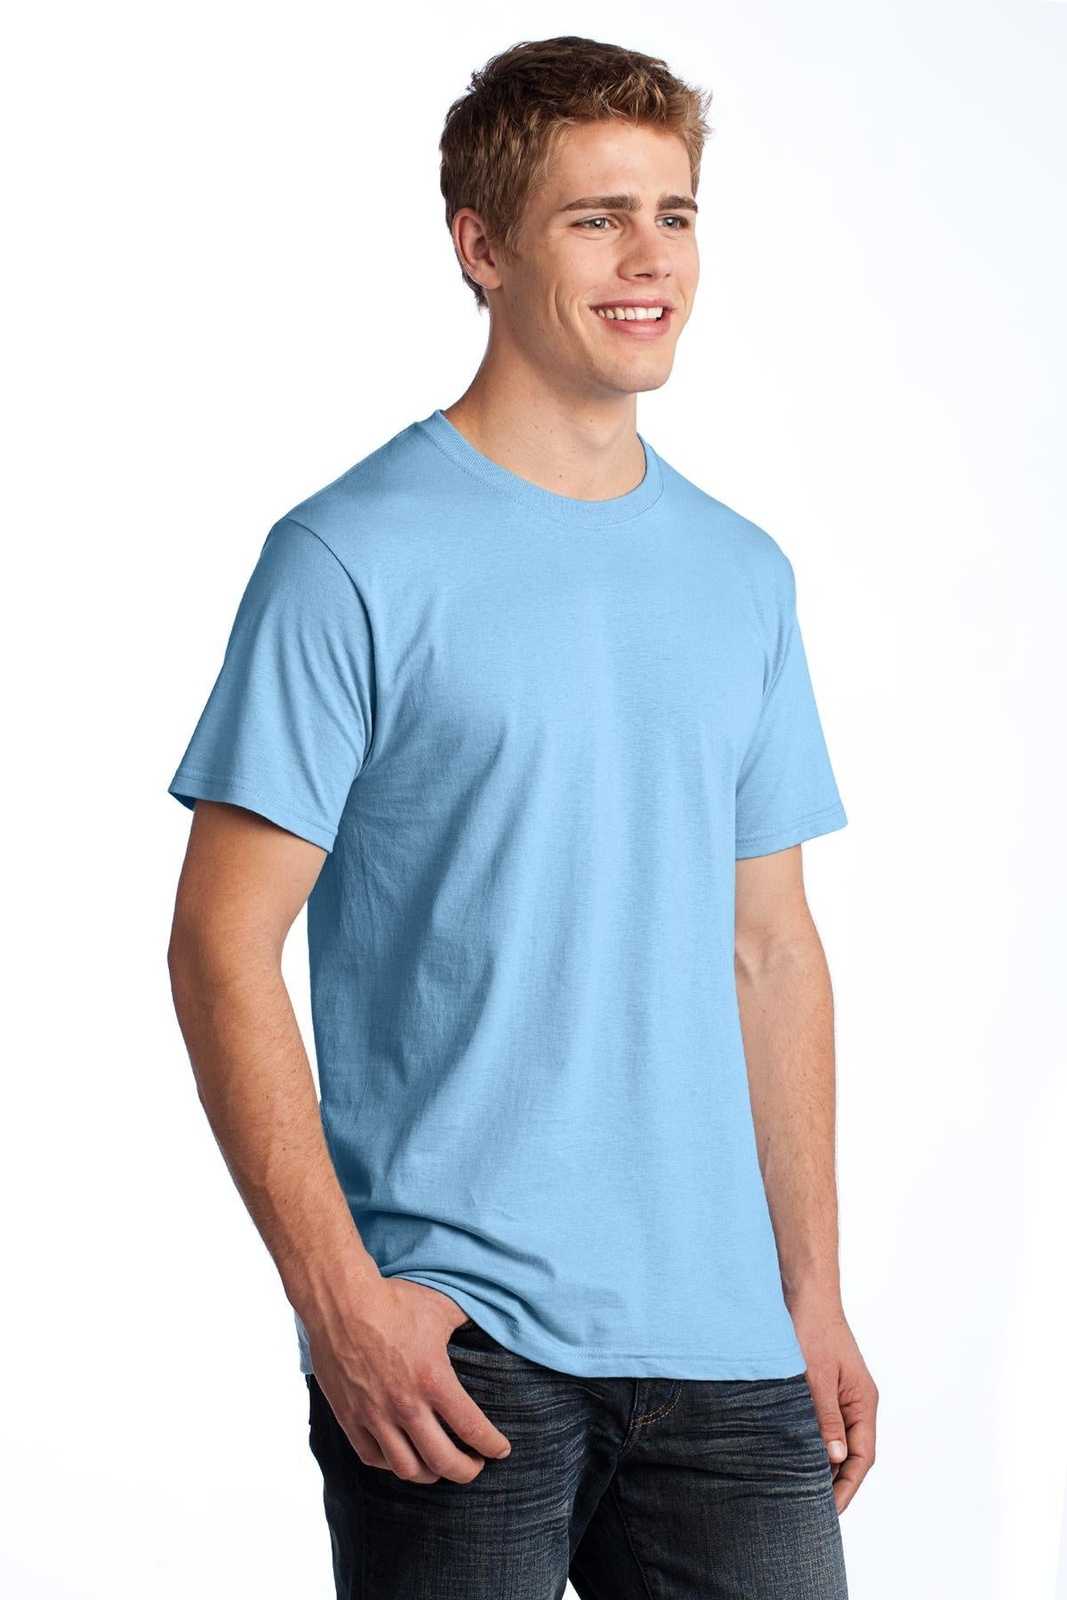 Fruit of the Loom 3930 HD Cotton 100% Cotton T-Shirt - Light Blue - HIT a Double